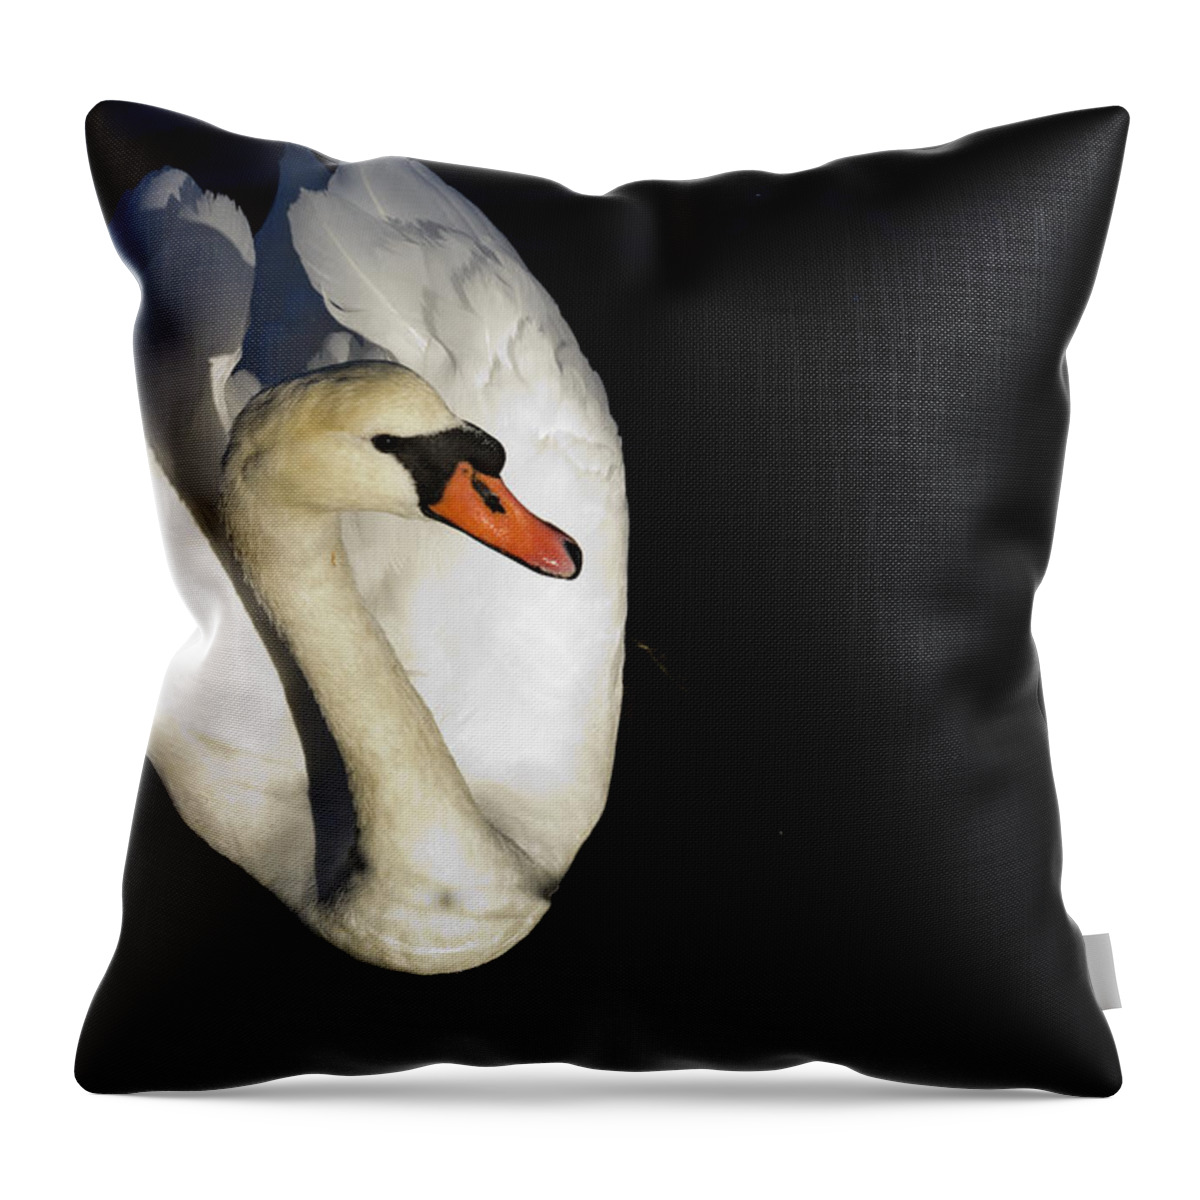 Swan Throw Pillow featuring the photograph The Swan by Bob VonDrachek